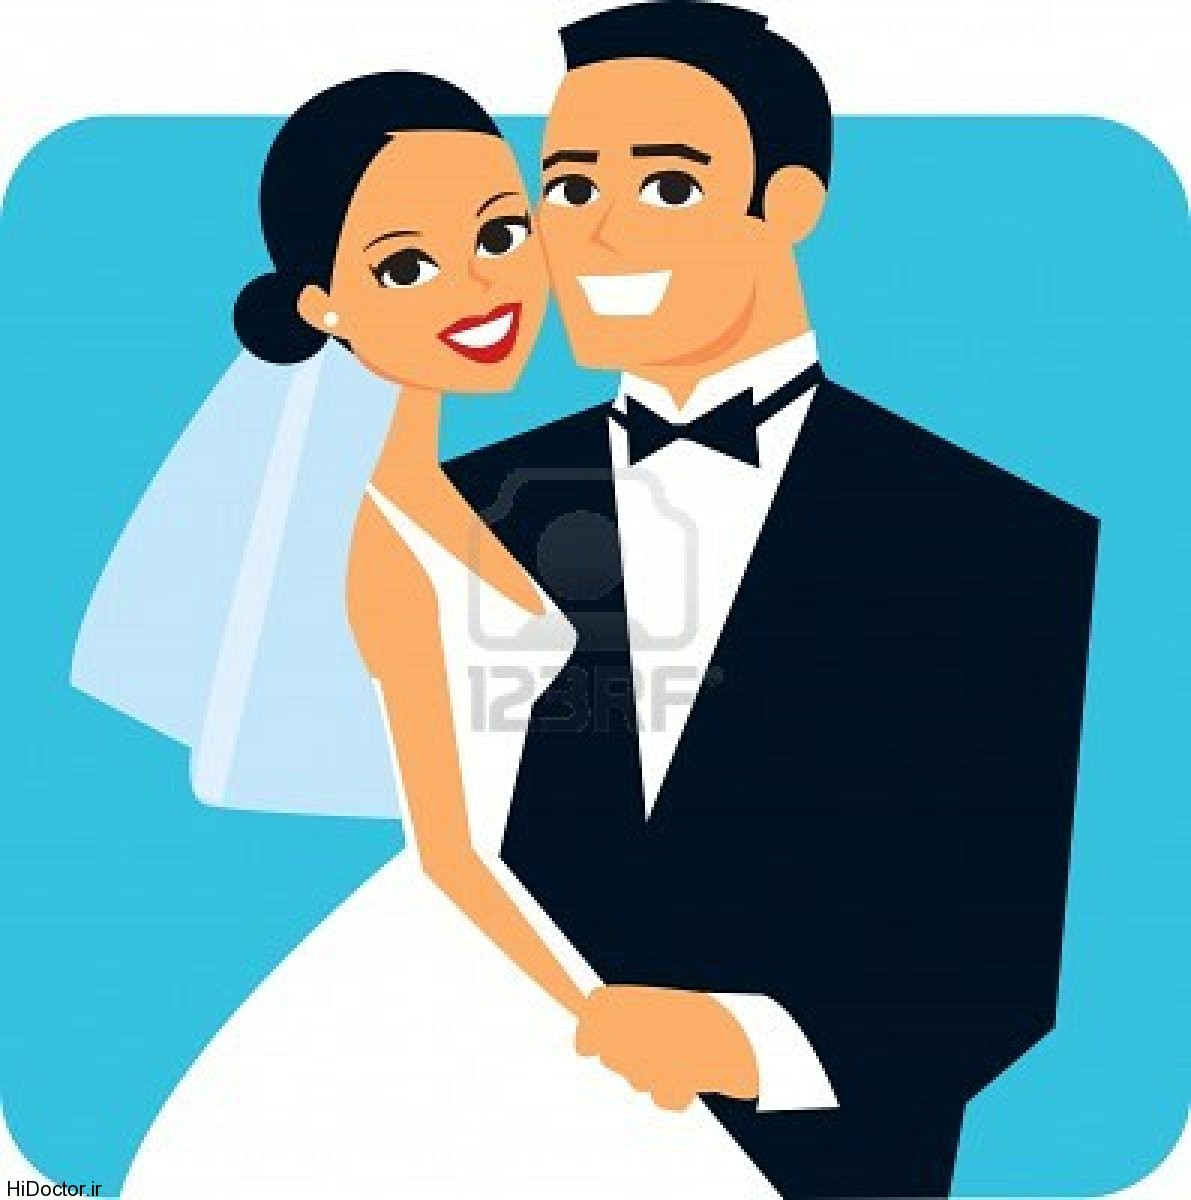 10964053-cartoon-wedding-couple-getting-married